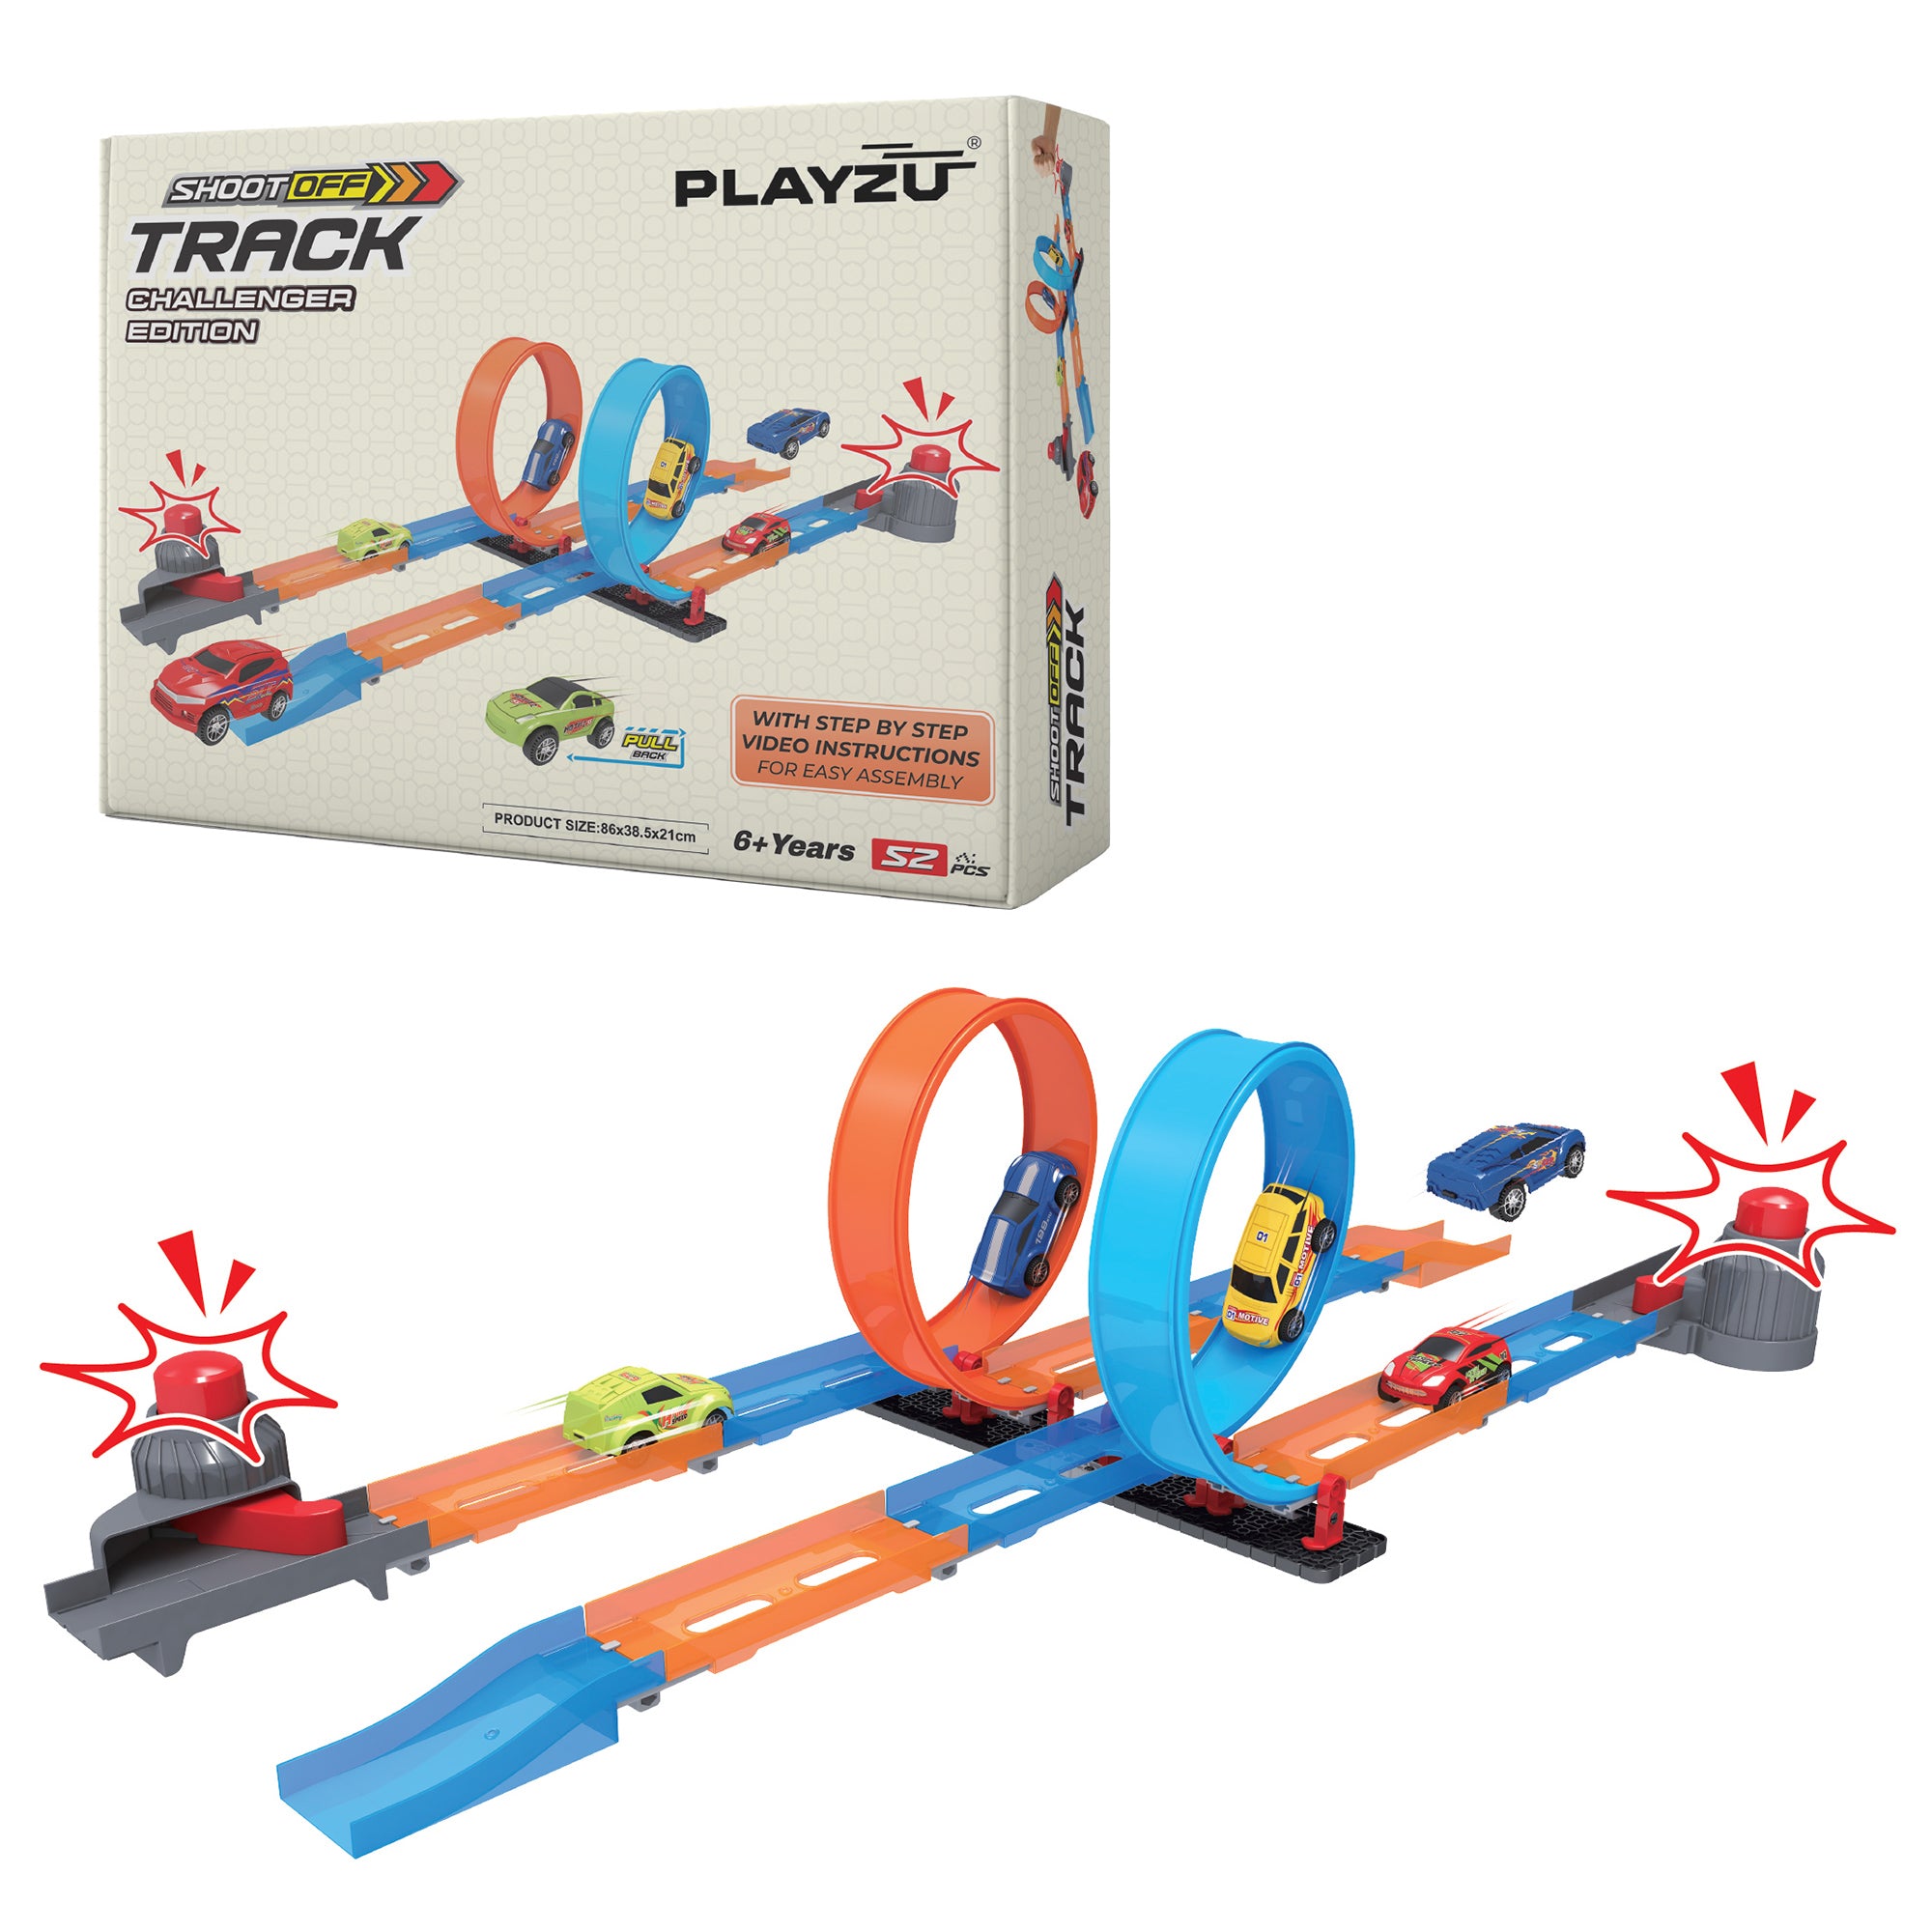 Playzu Shoot-Off Track-2-Comp 6+Years